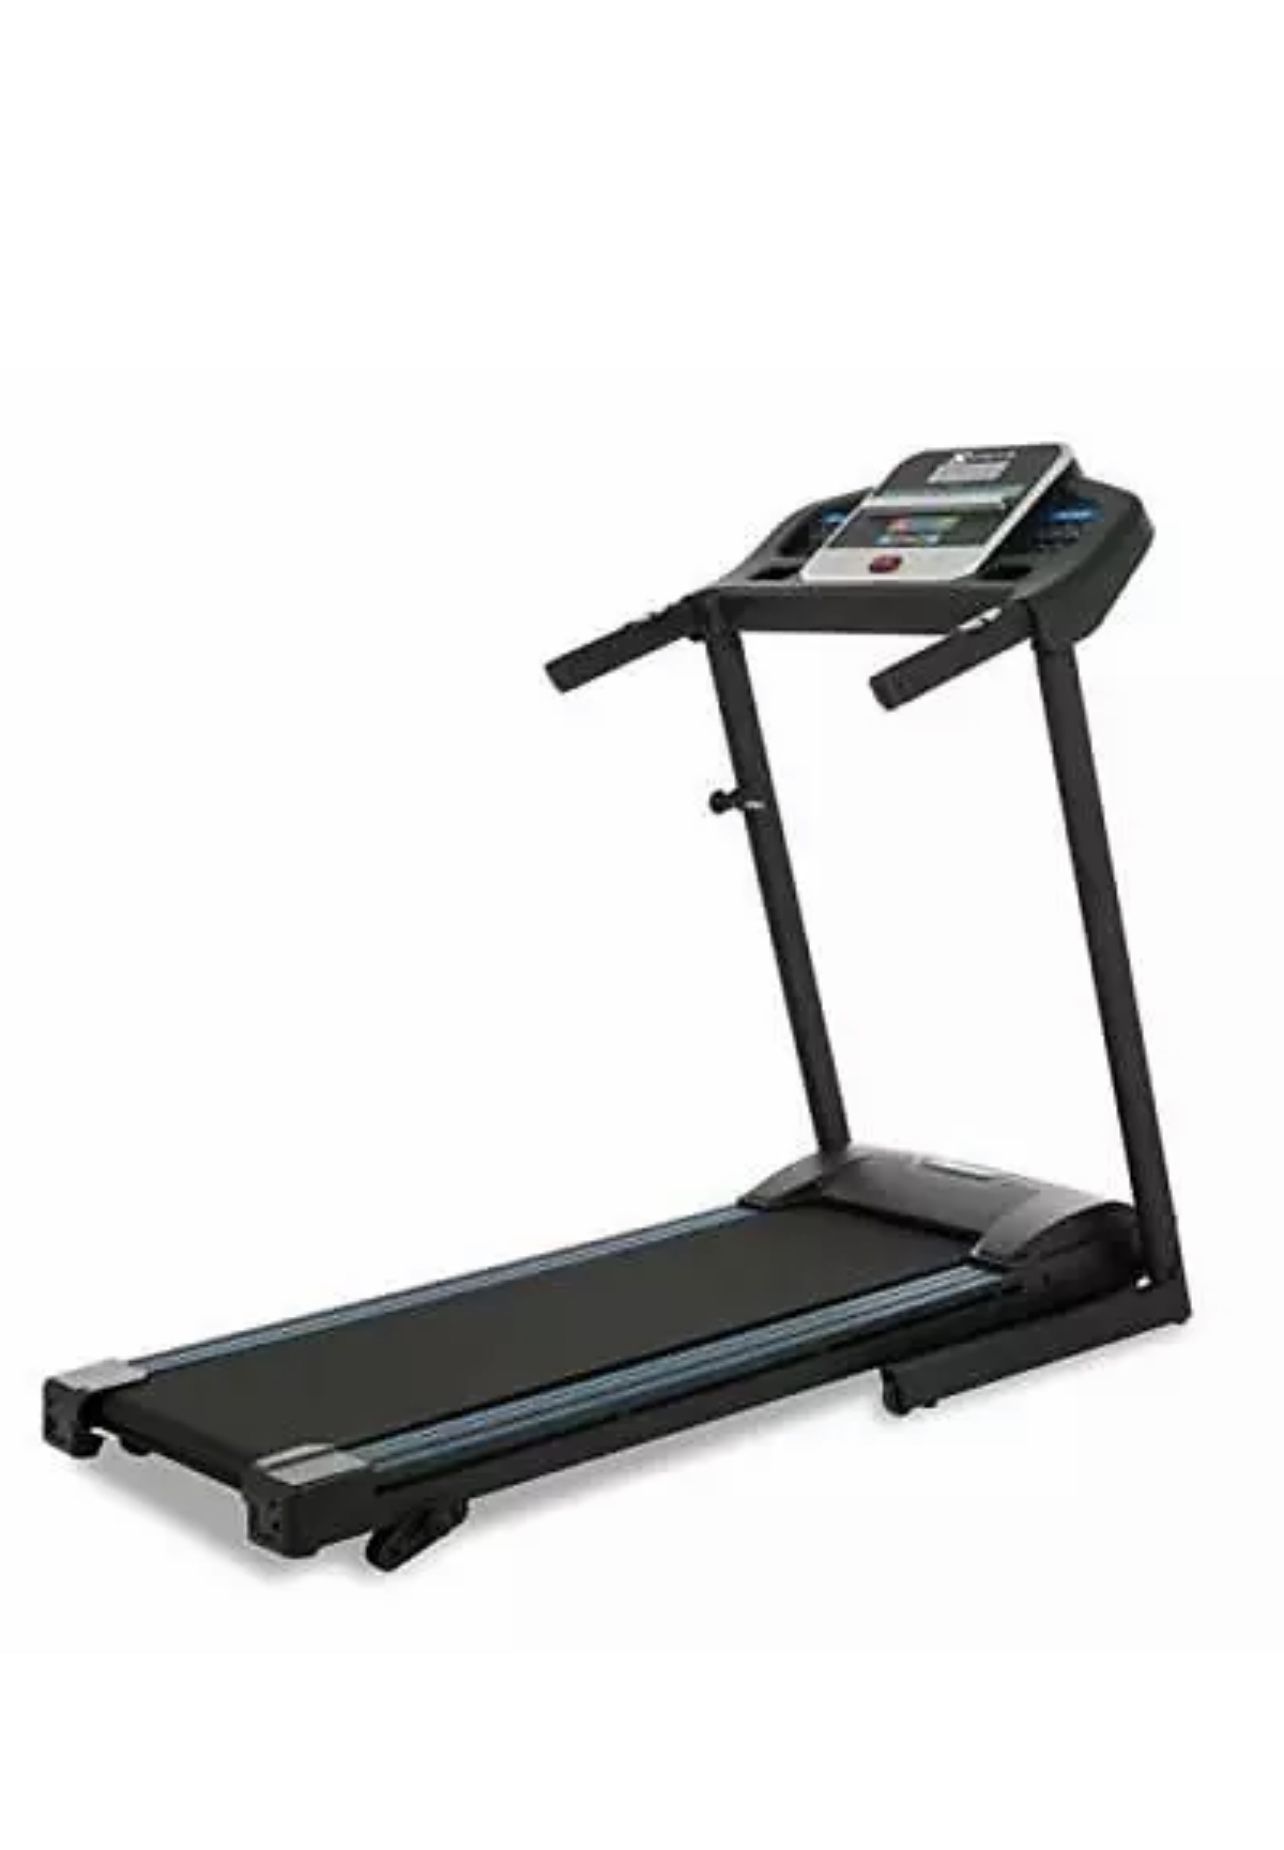 XTERRA Fitness Sporting Running Cardio Equipment TR150 Folding Treadmill Black